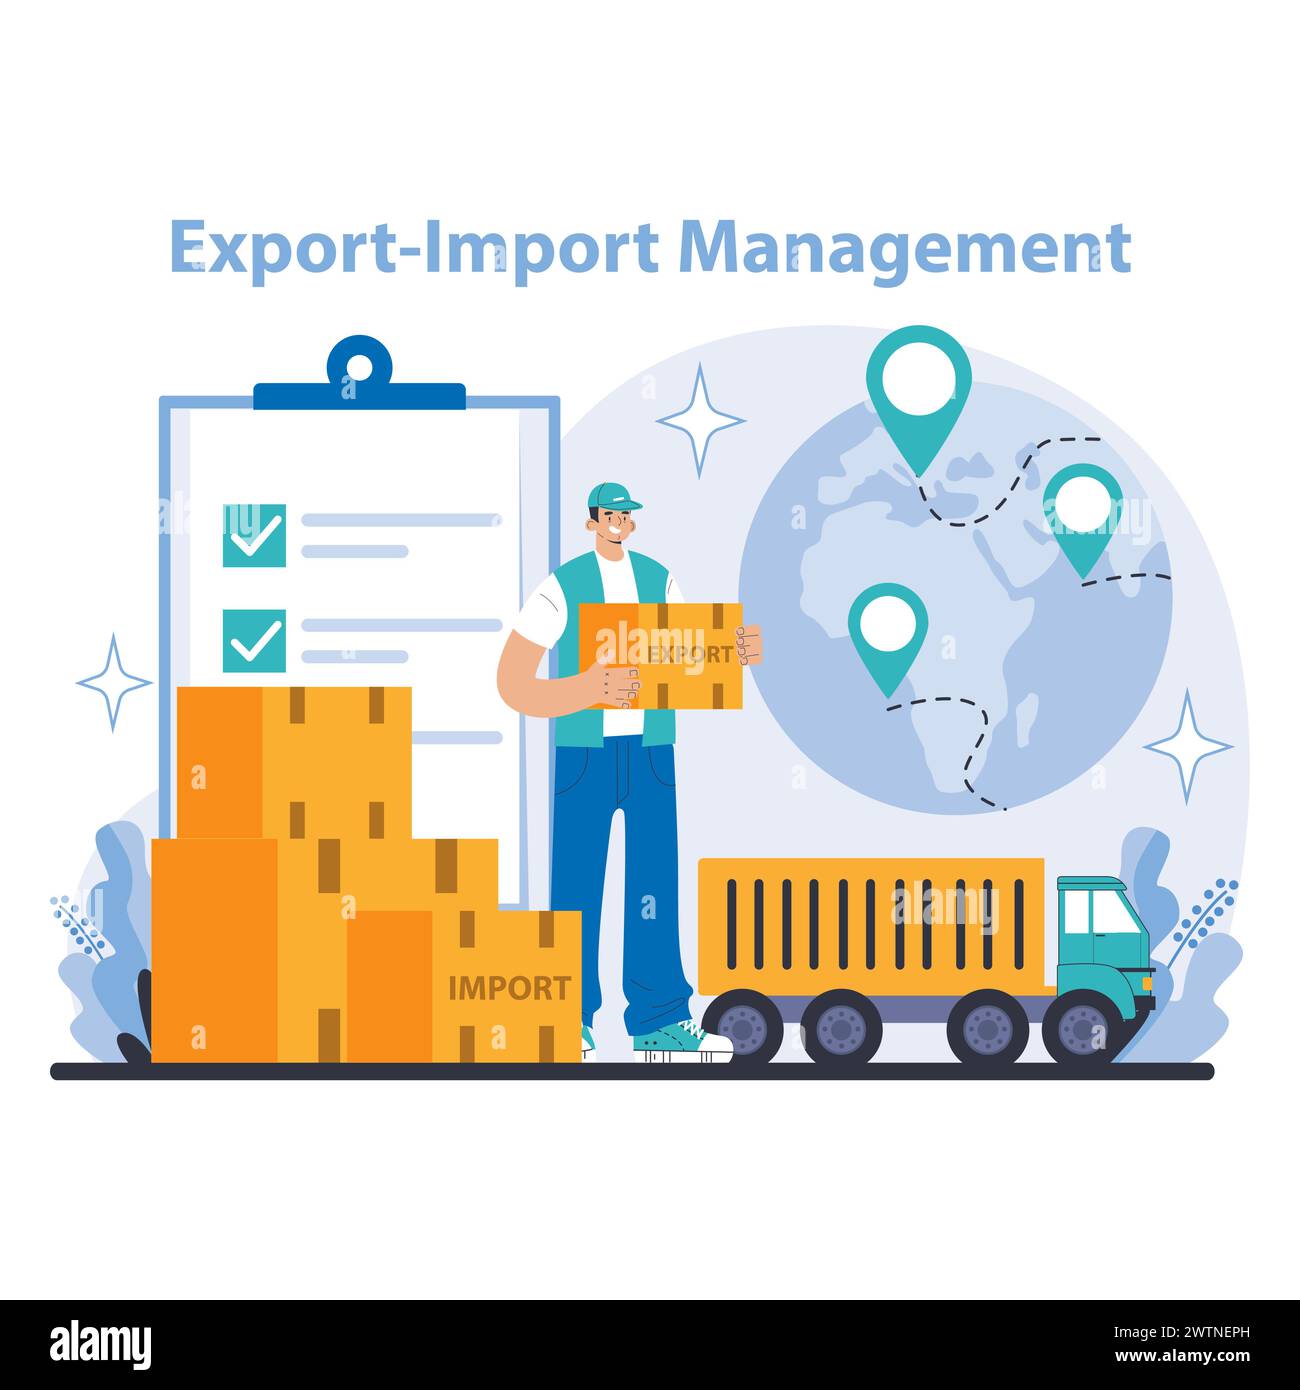 Export-import management concept. Detailed depiction of export-import management. Coordinating global shipment logistics. Illustrating trade compliance and documentation. Flat vector illustration. Stock Vector